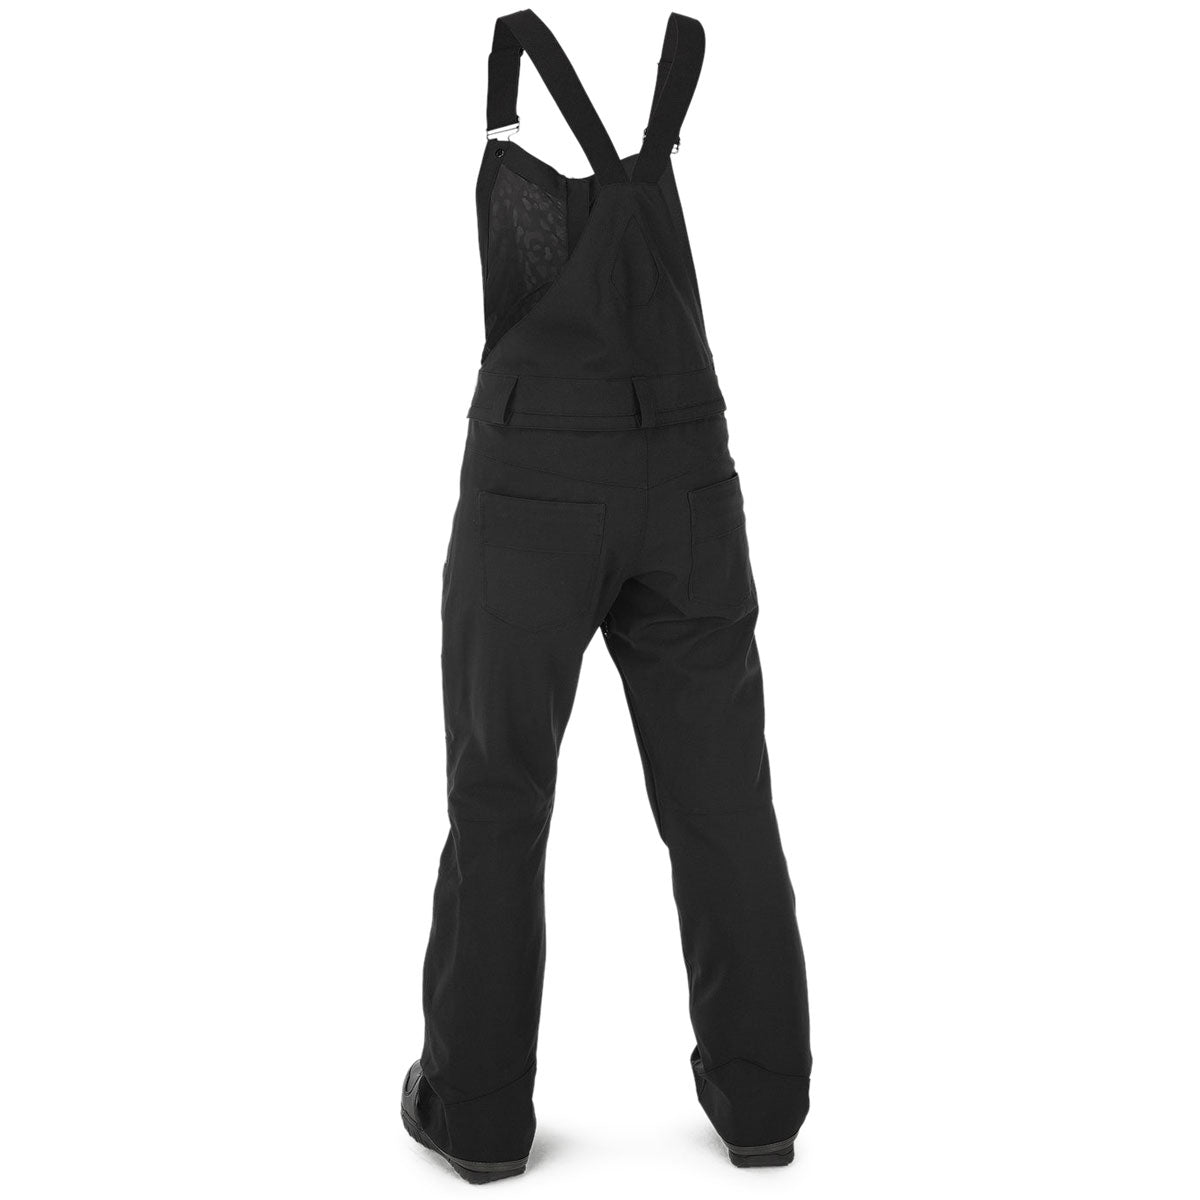 Volcom Womens Swifts Bib Overall Snowboard Pants - Black image 2